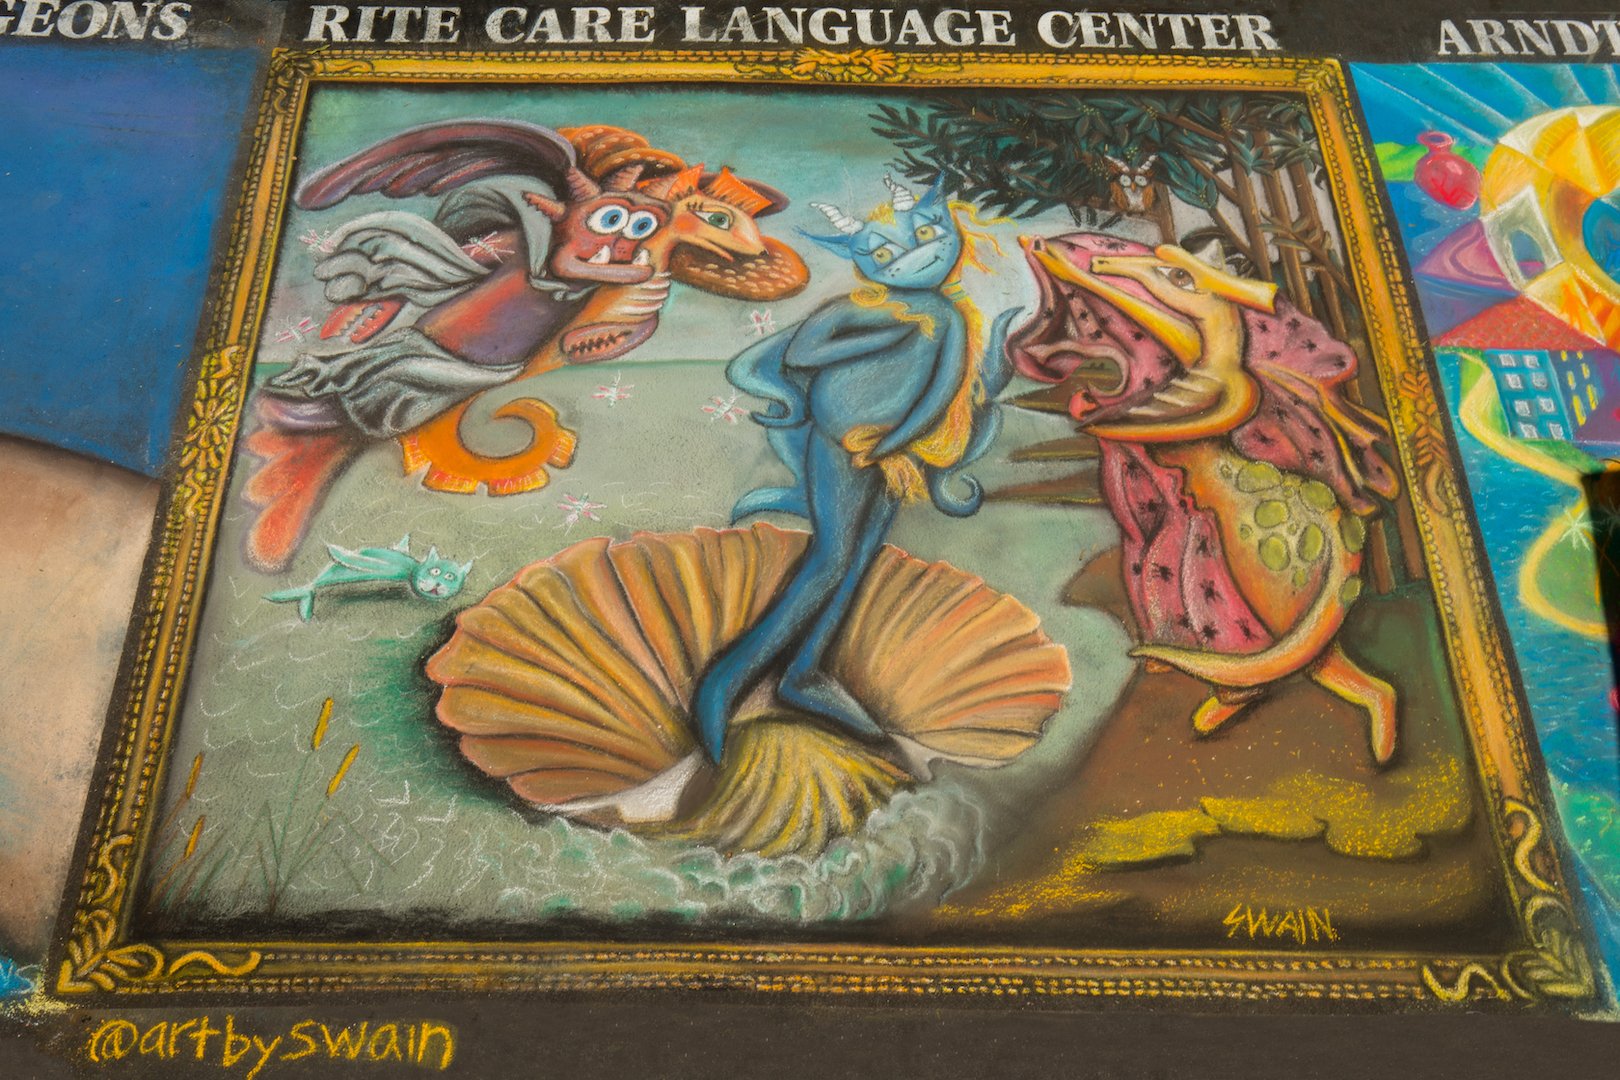  Santa Barbara RiteCare Language Center  Artist:  Jen Swain 